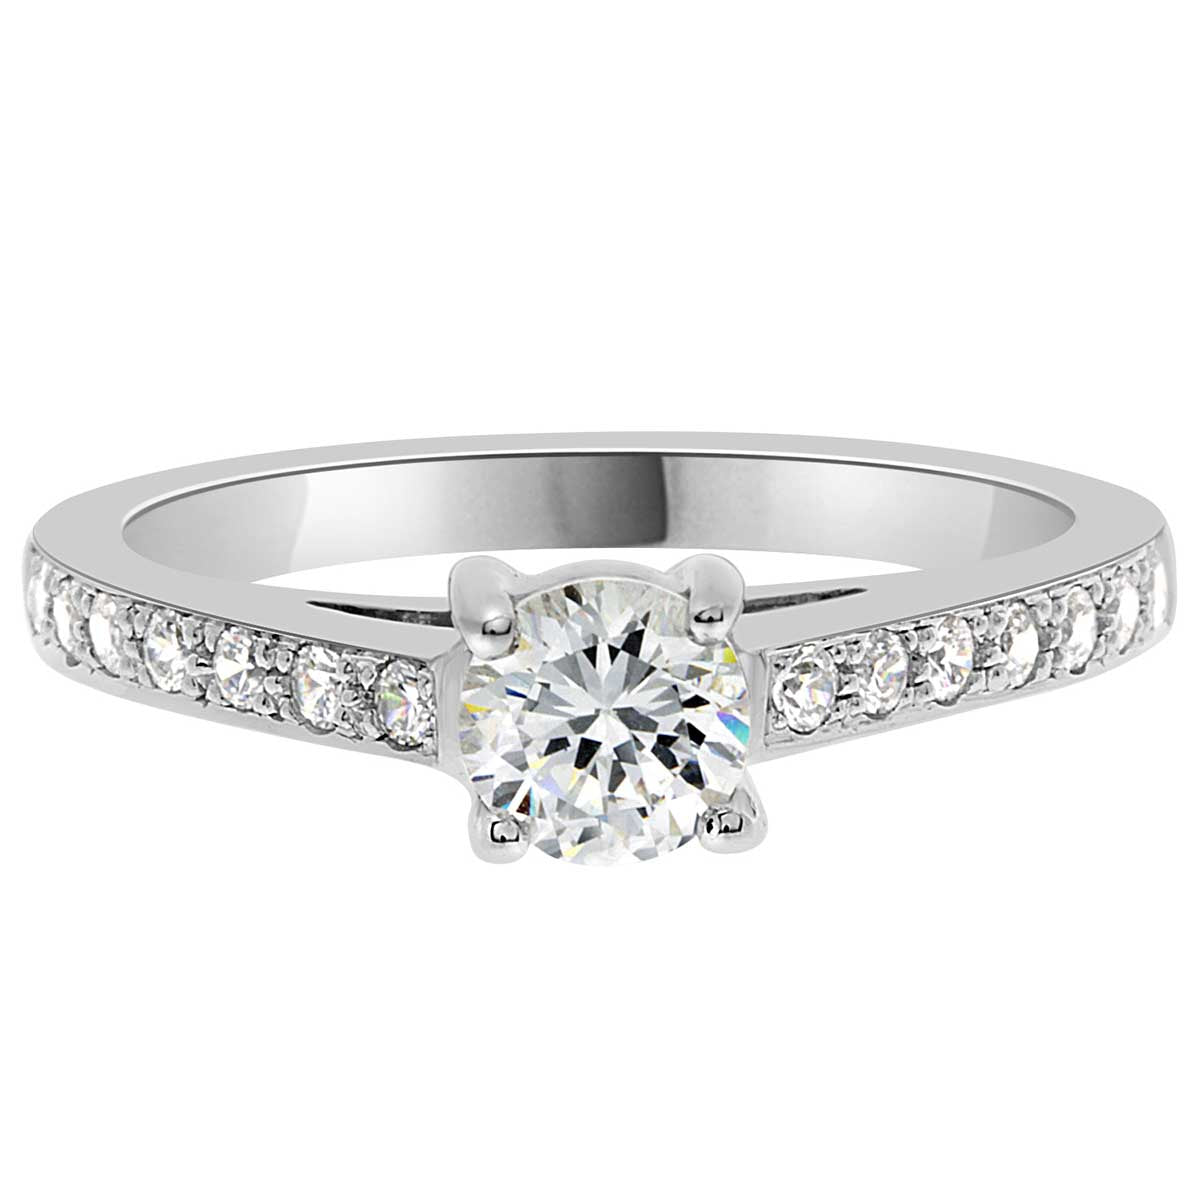 Pavé Diamond Ring manufactured in white gold